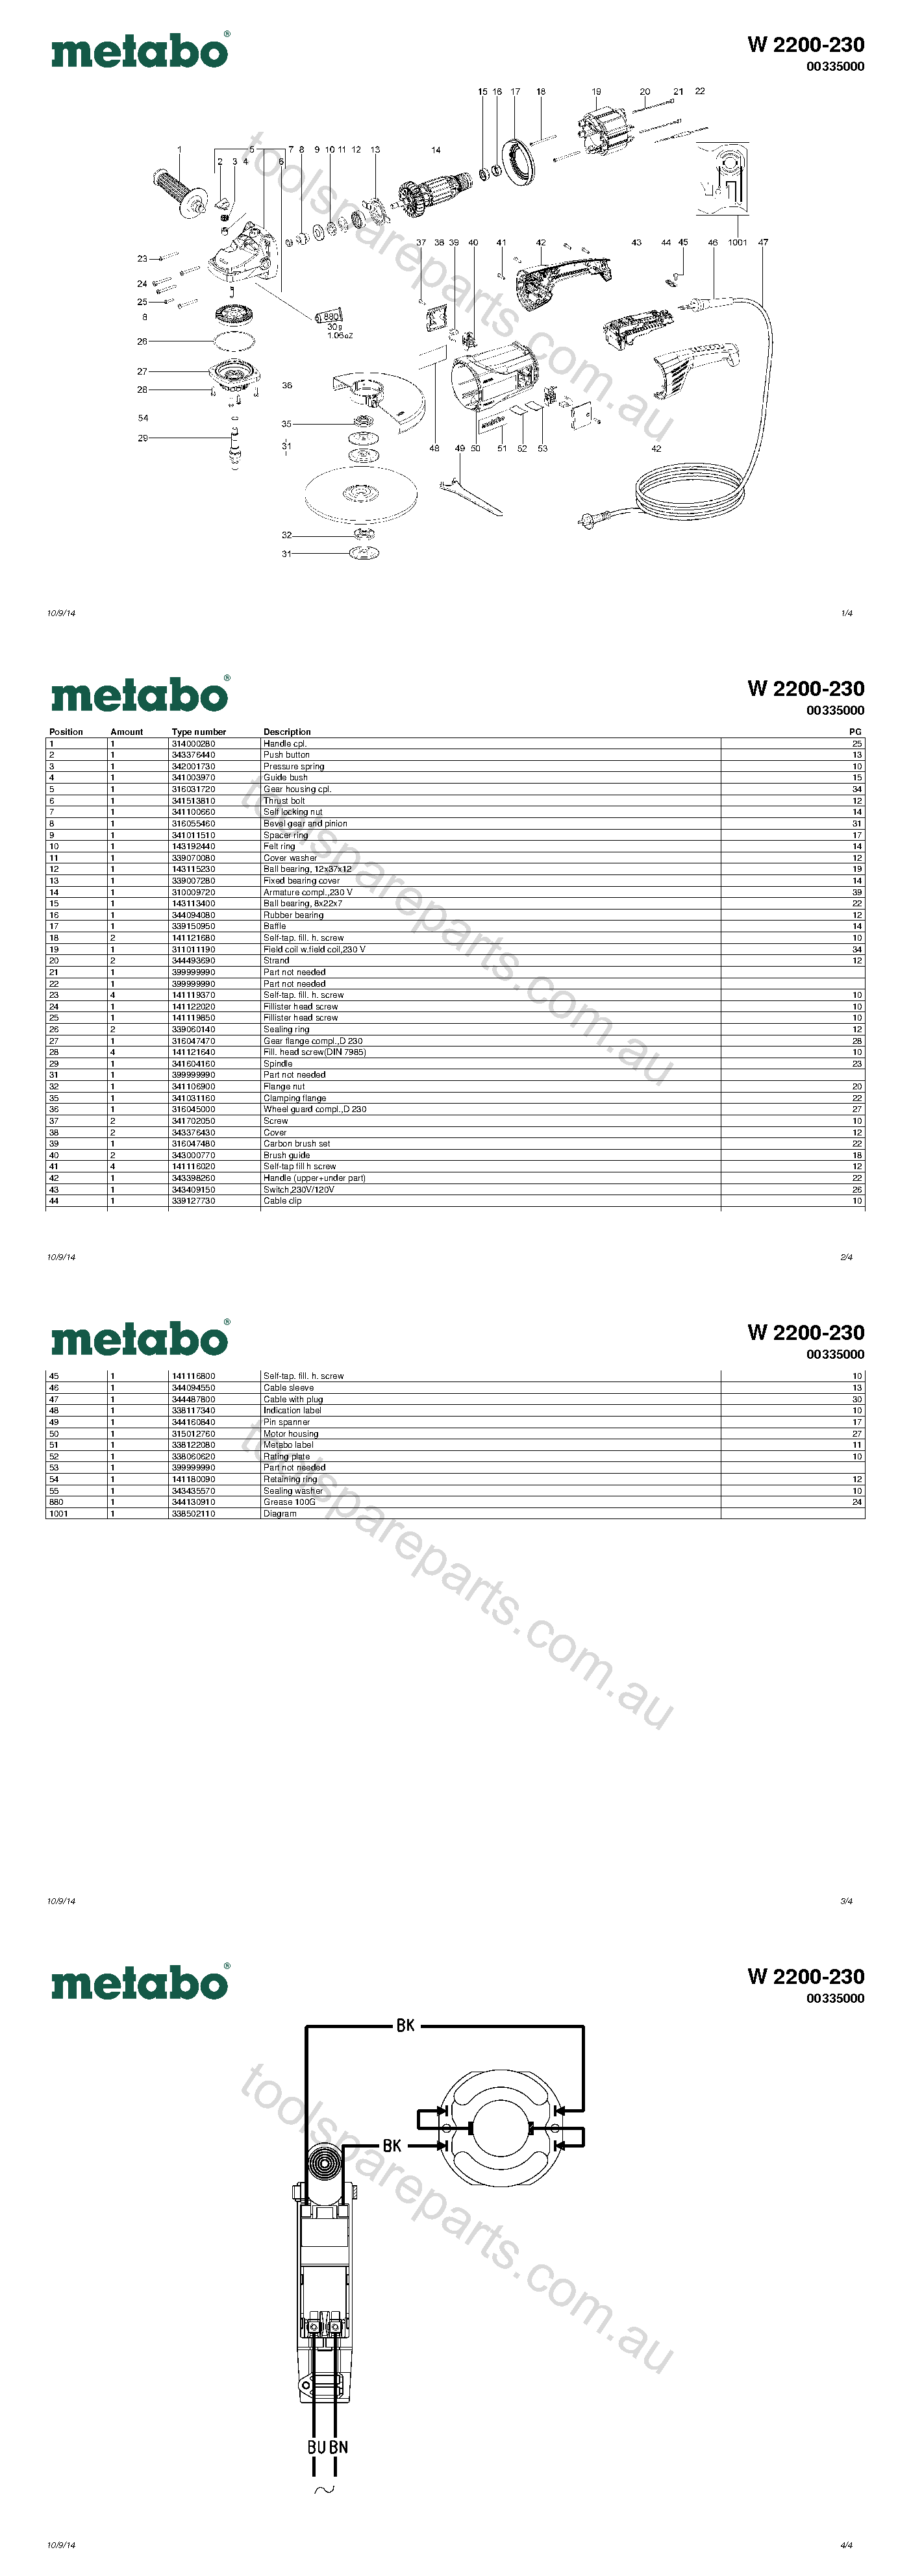 Metabo W 2200-230 00335000  Diagram 1